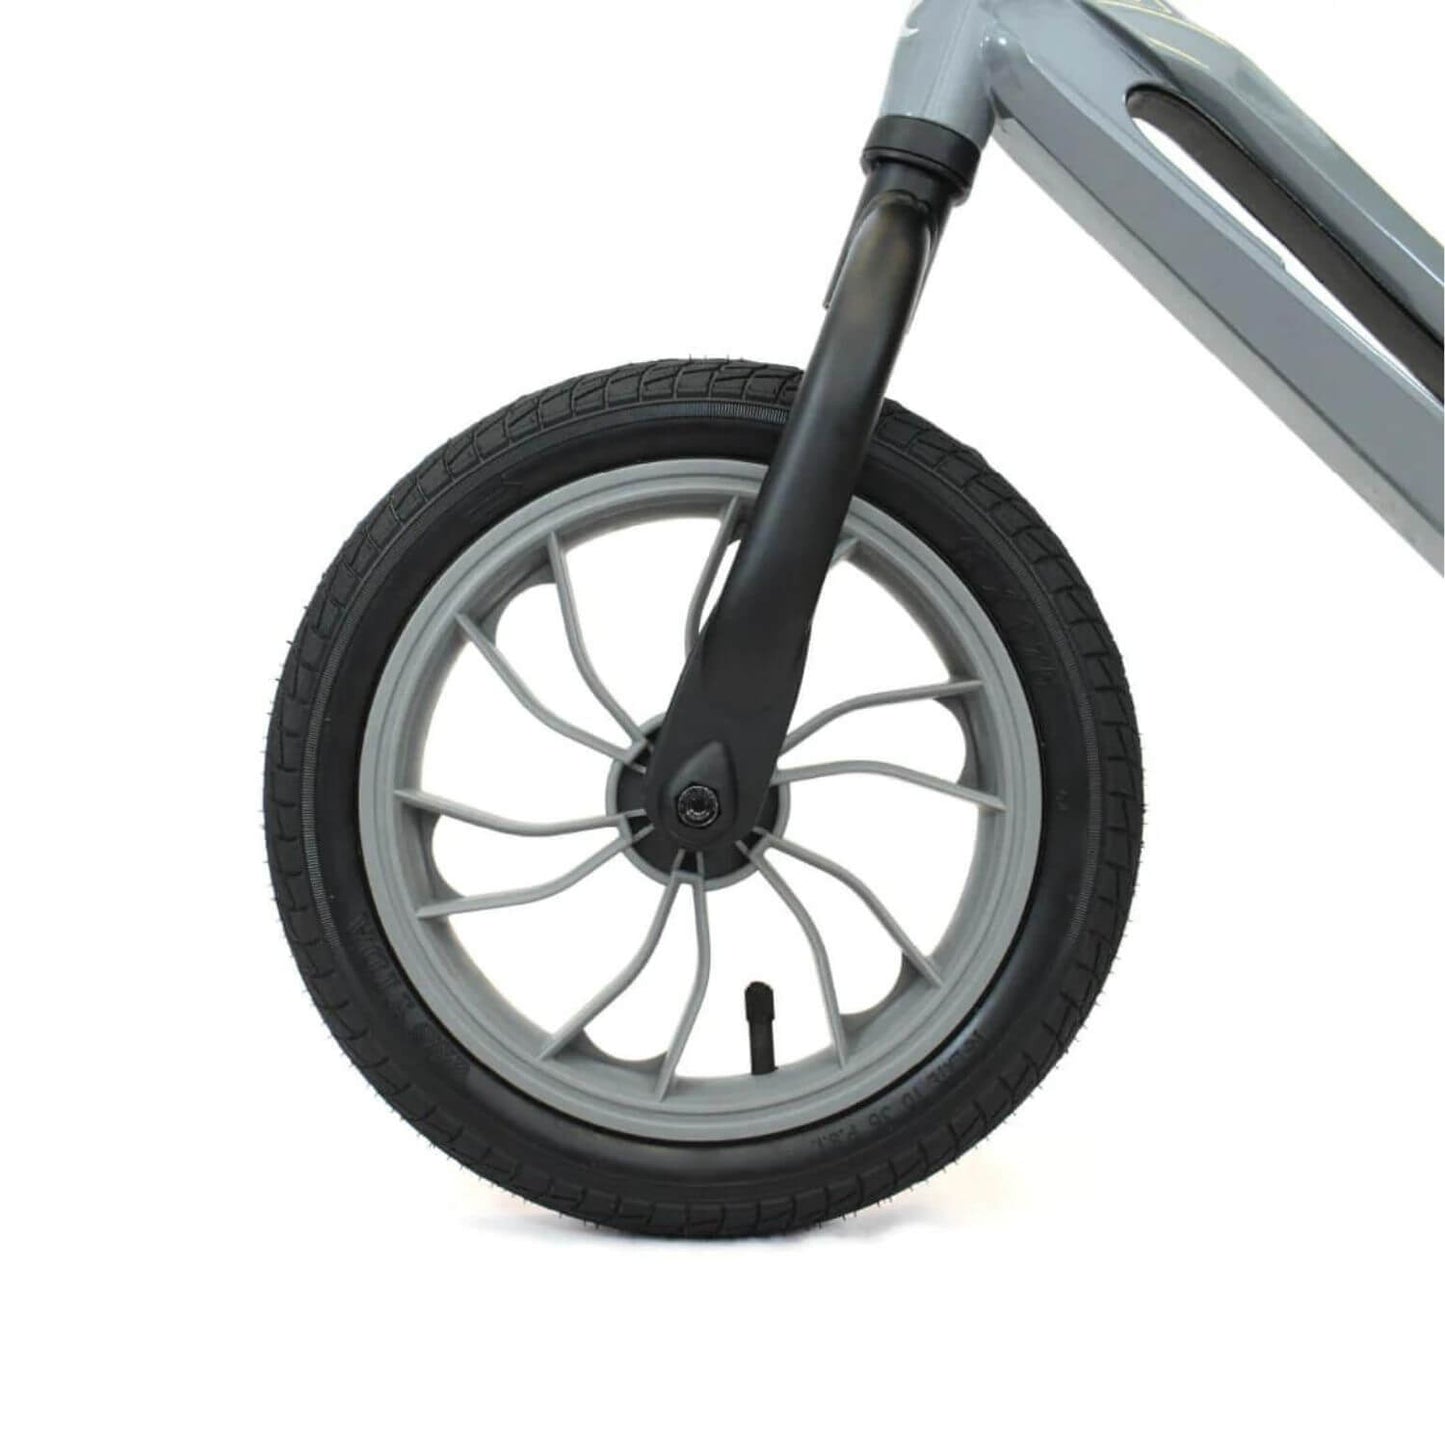 Q-Play Racer Balance Bike Grey - Detail